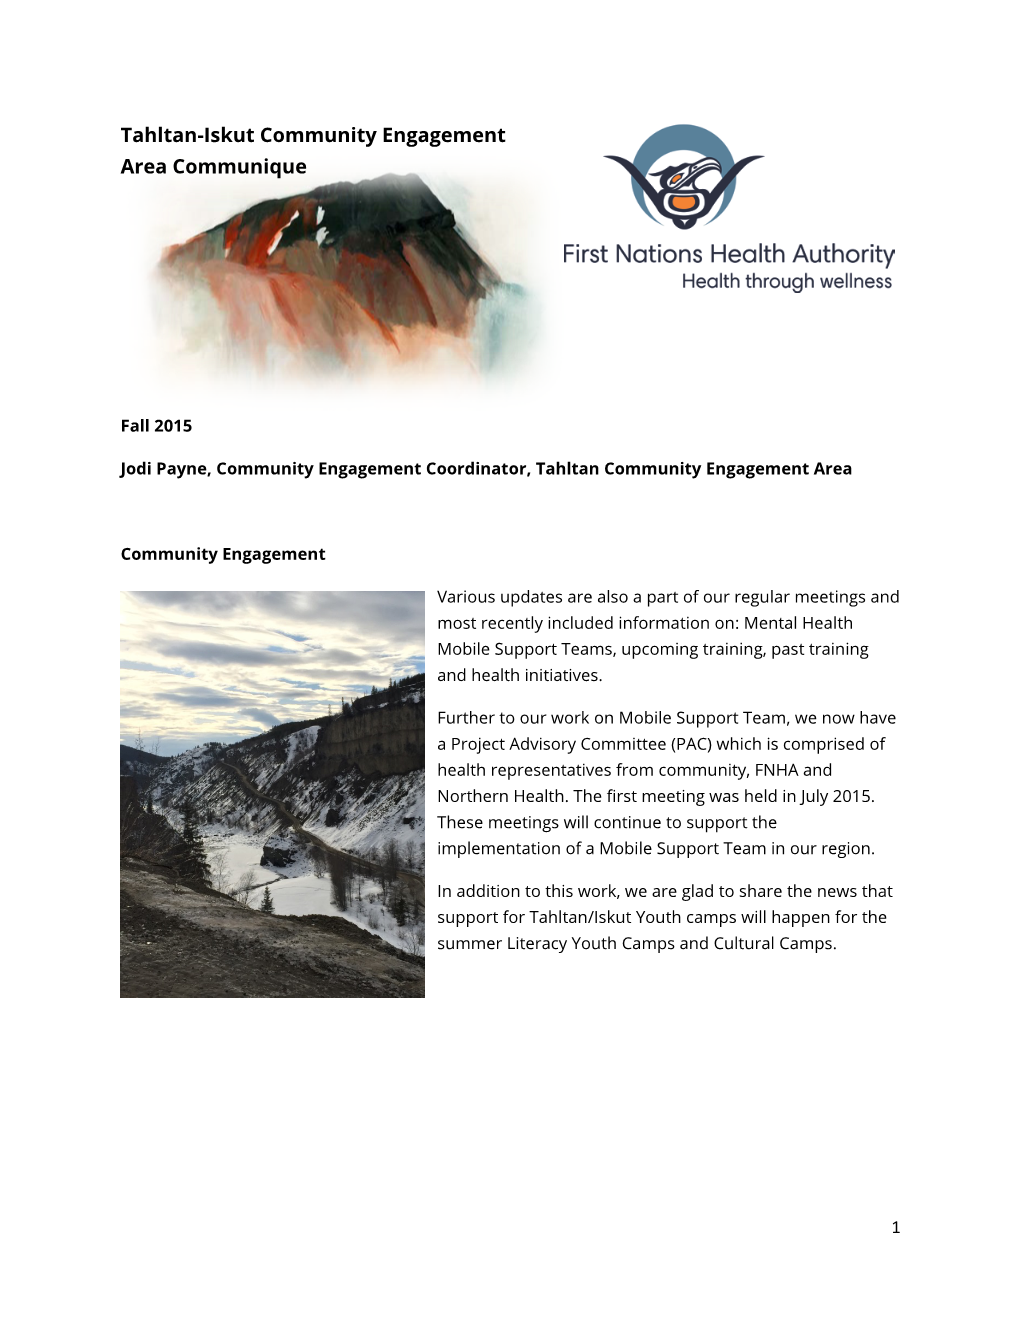 Tahltan-Iskut Community Engagement Area Communique